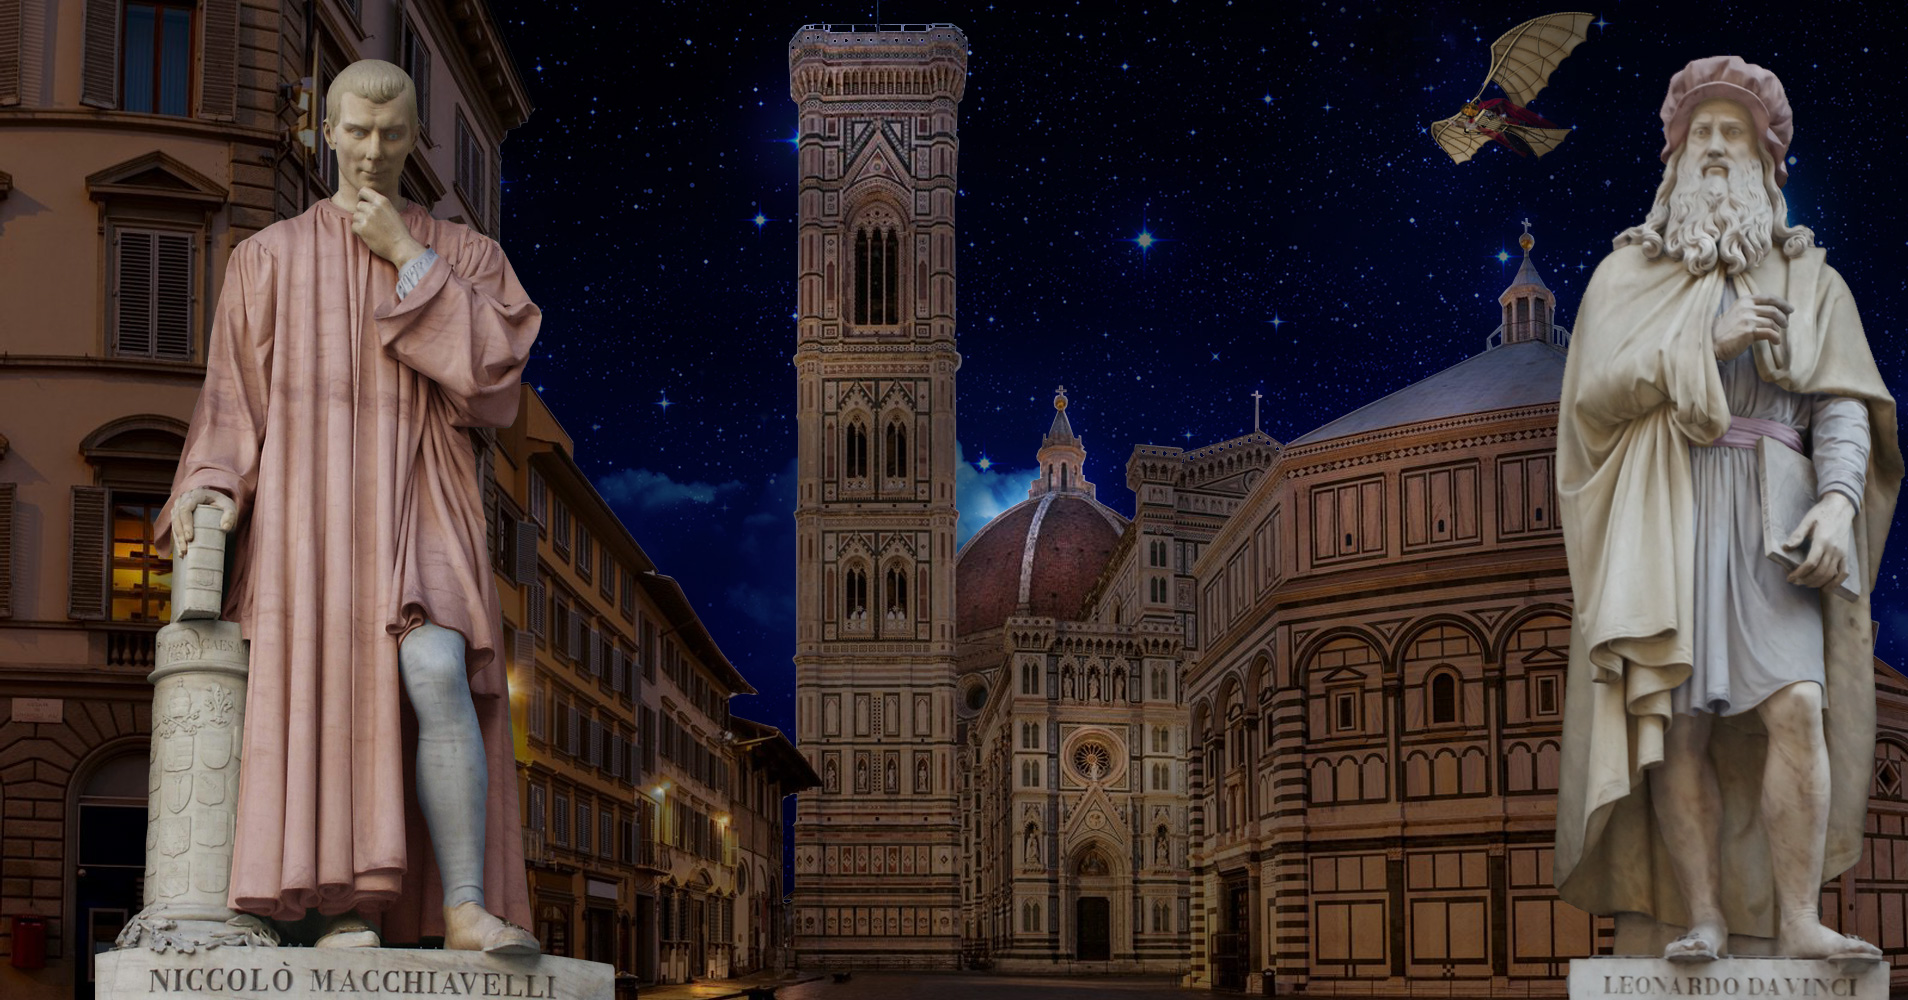 Niccolò Machiavelli and Leonardo da Vinci Symbols of the Renaissance in Florence Italy, testify to the importance of the wisdom of history.